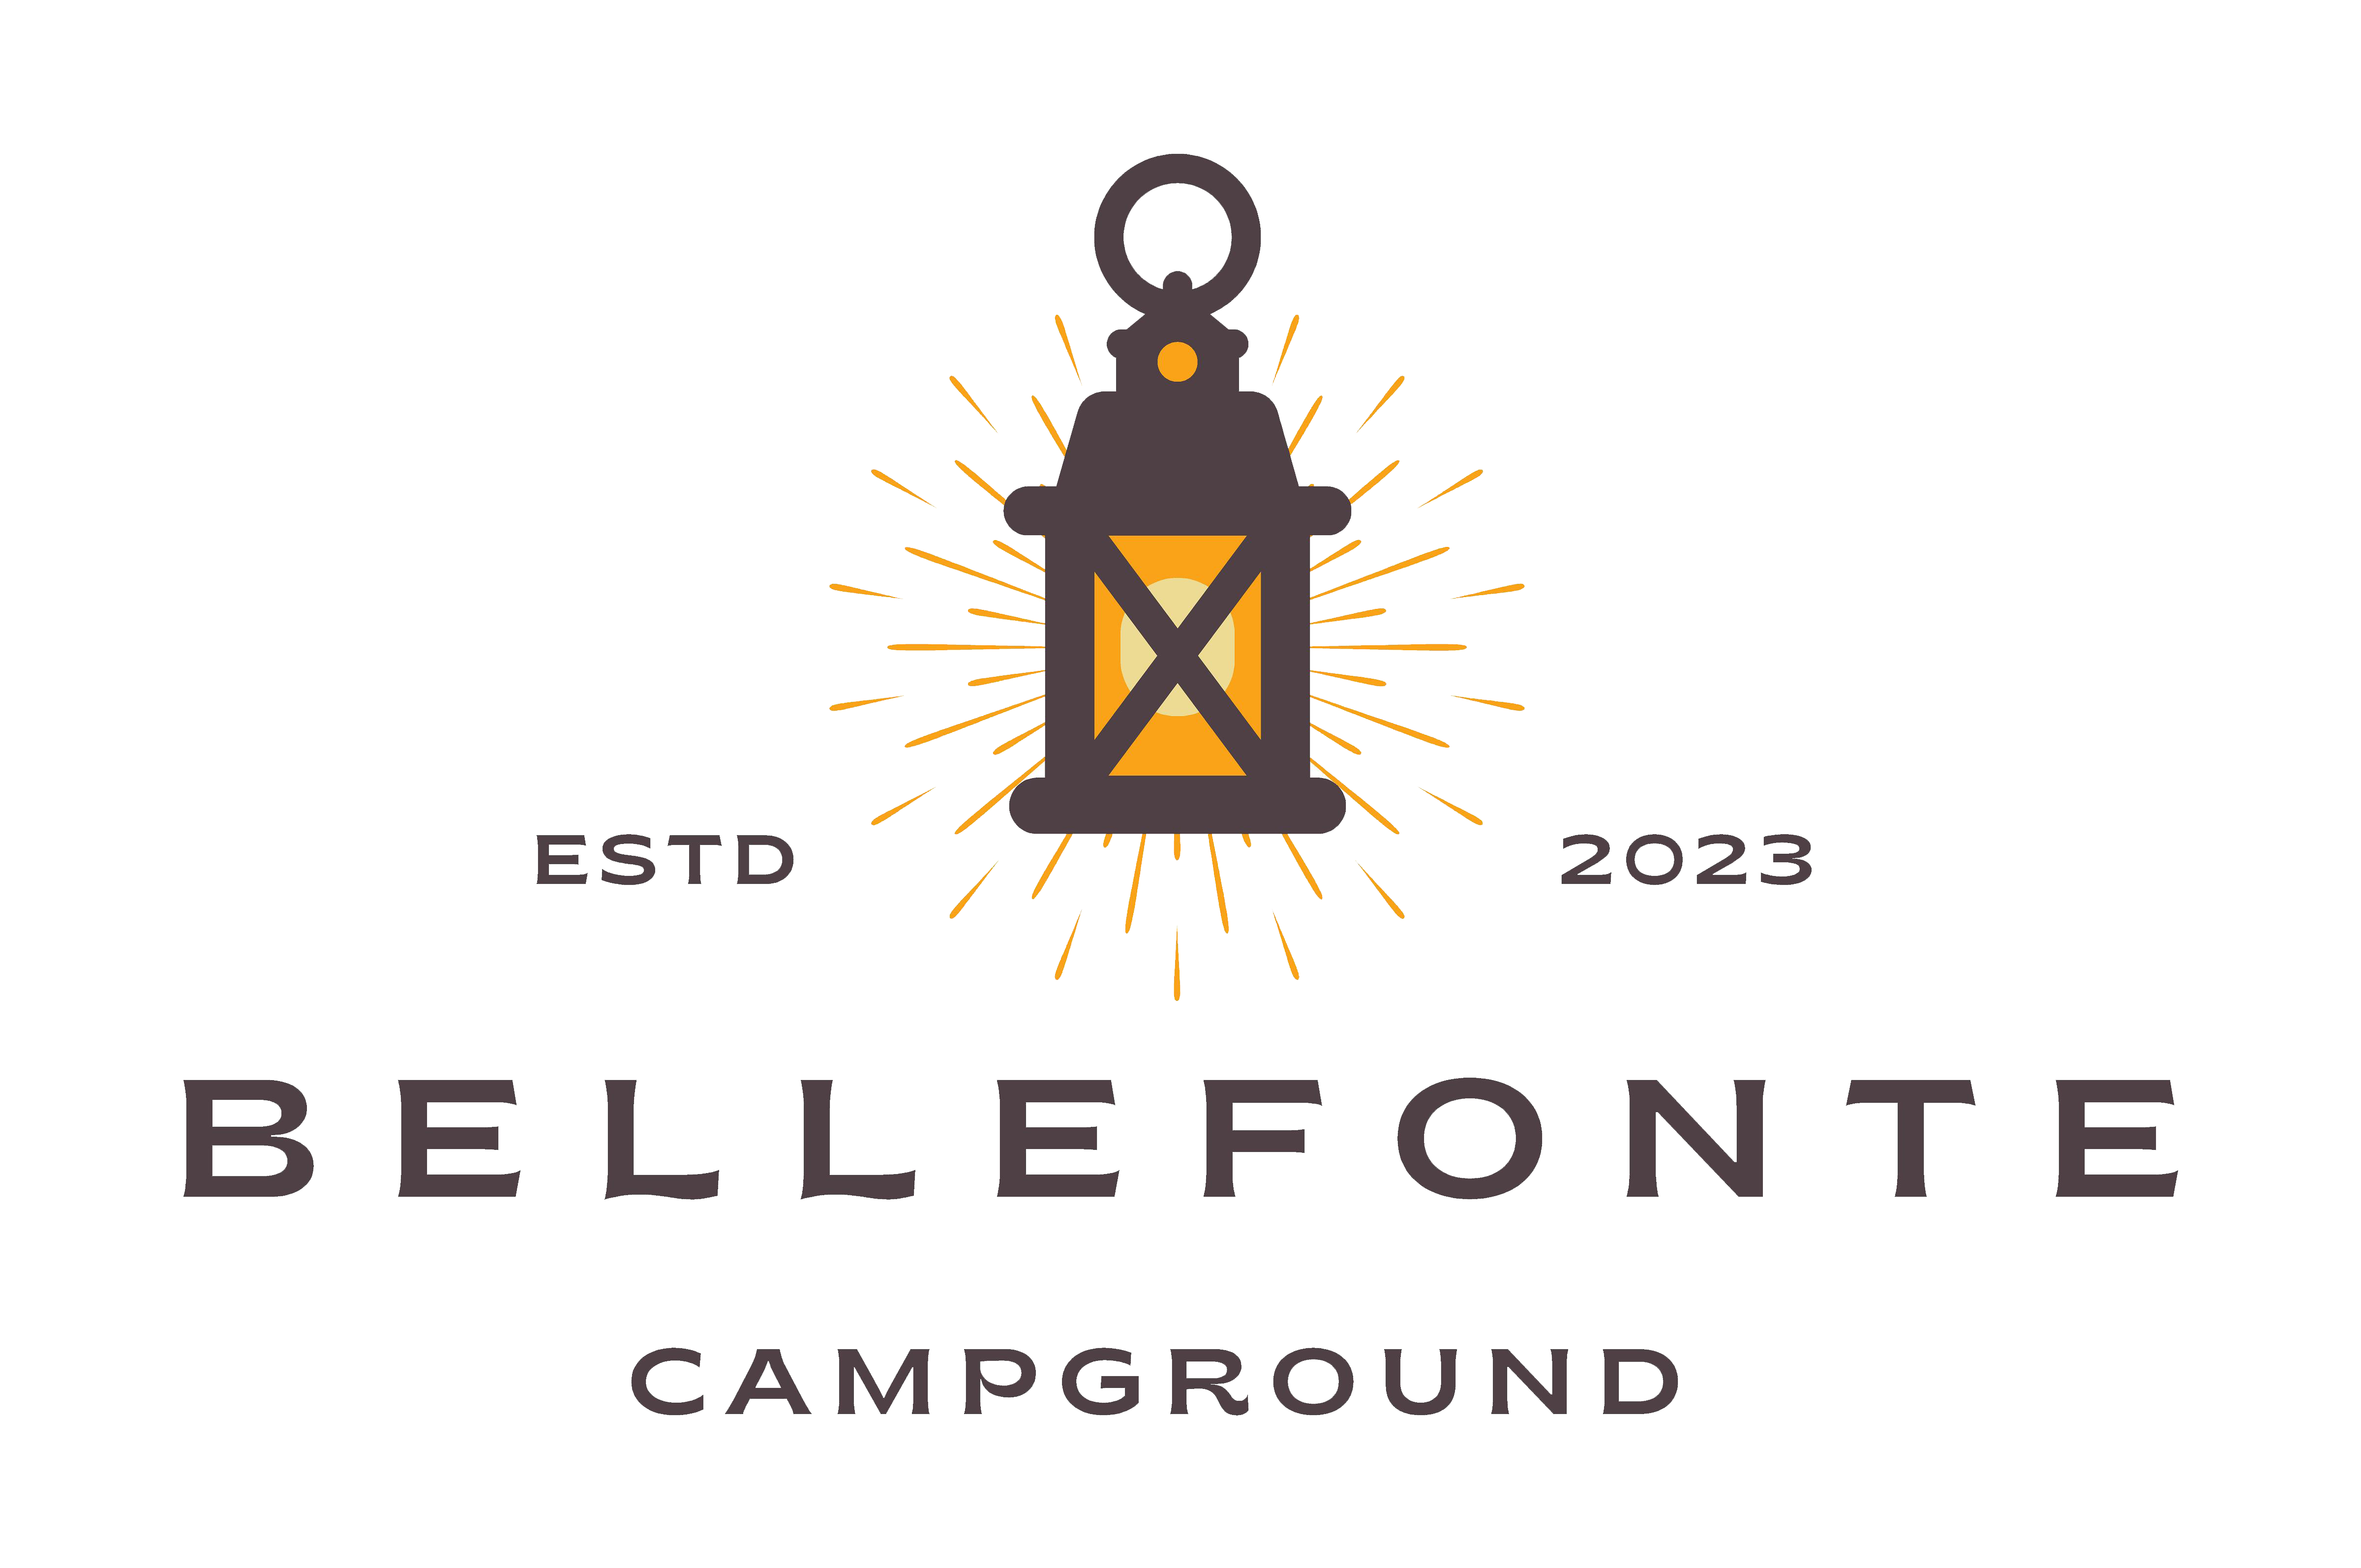 The Bellefonte Campground